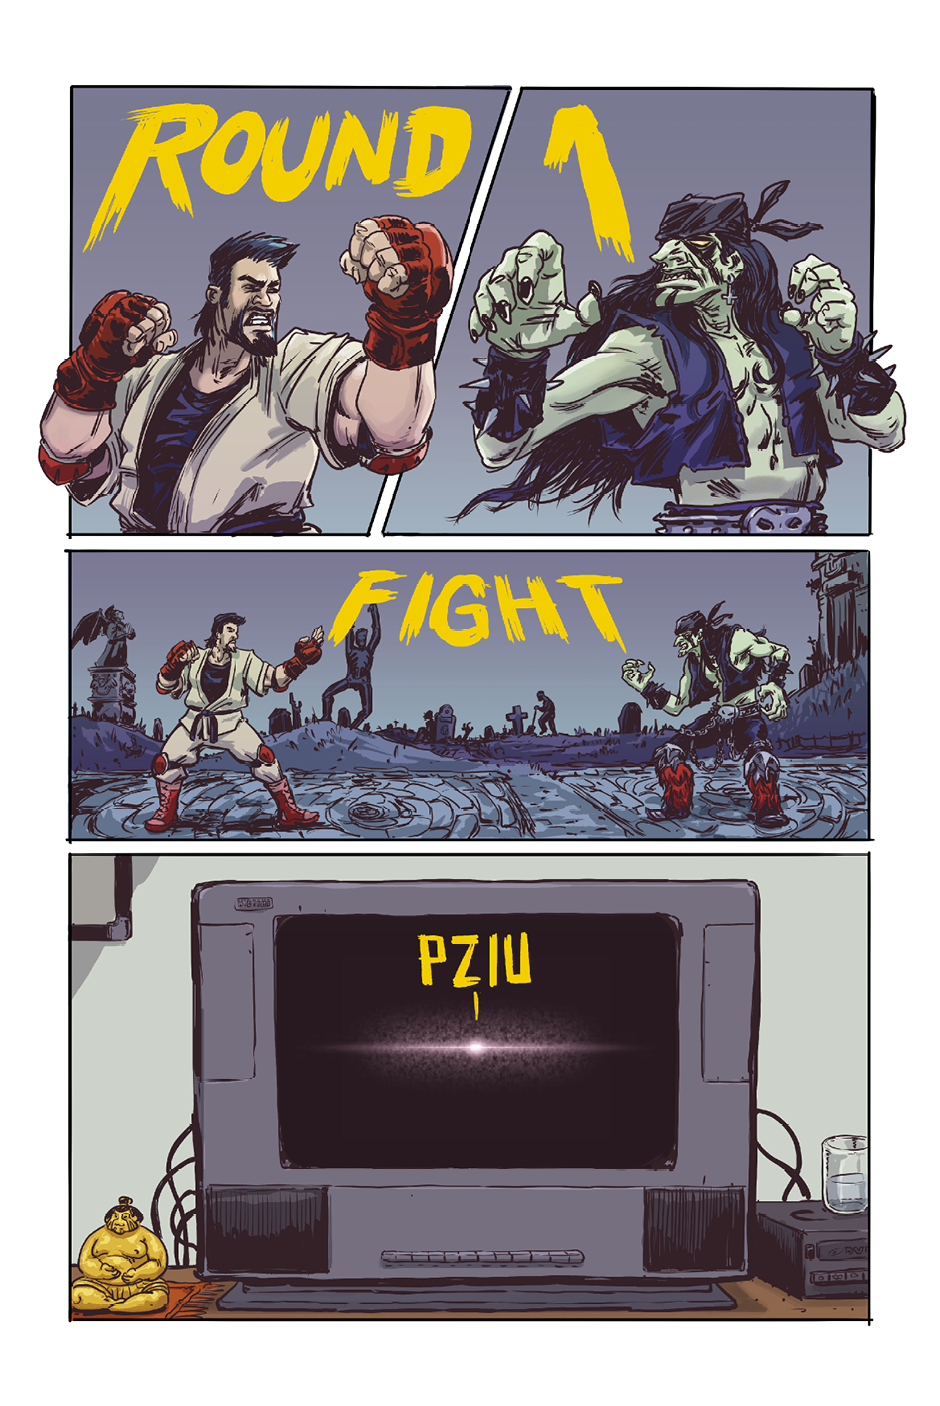 Webcomic fighting videogame arcade action adventure comics indie Pixel art Comic Book